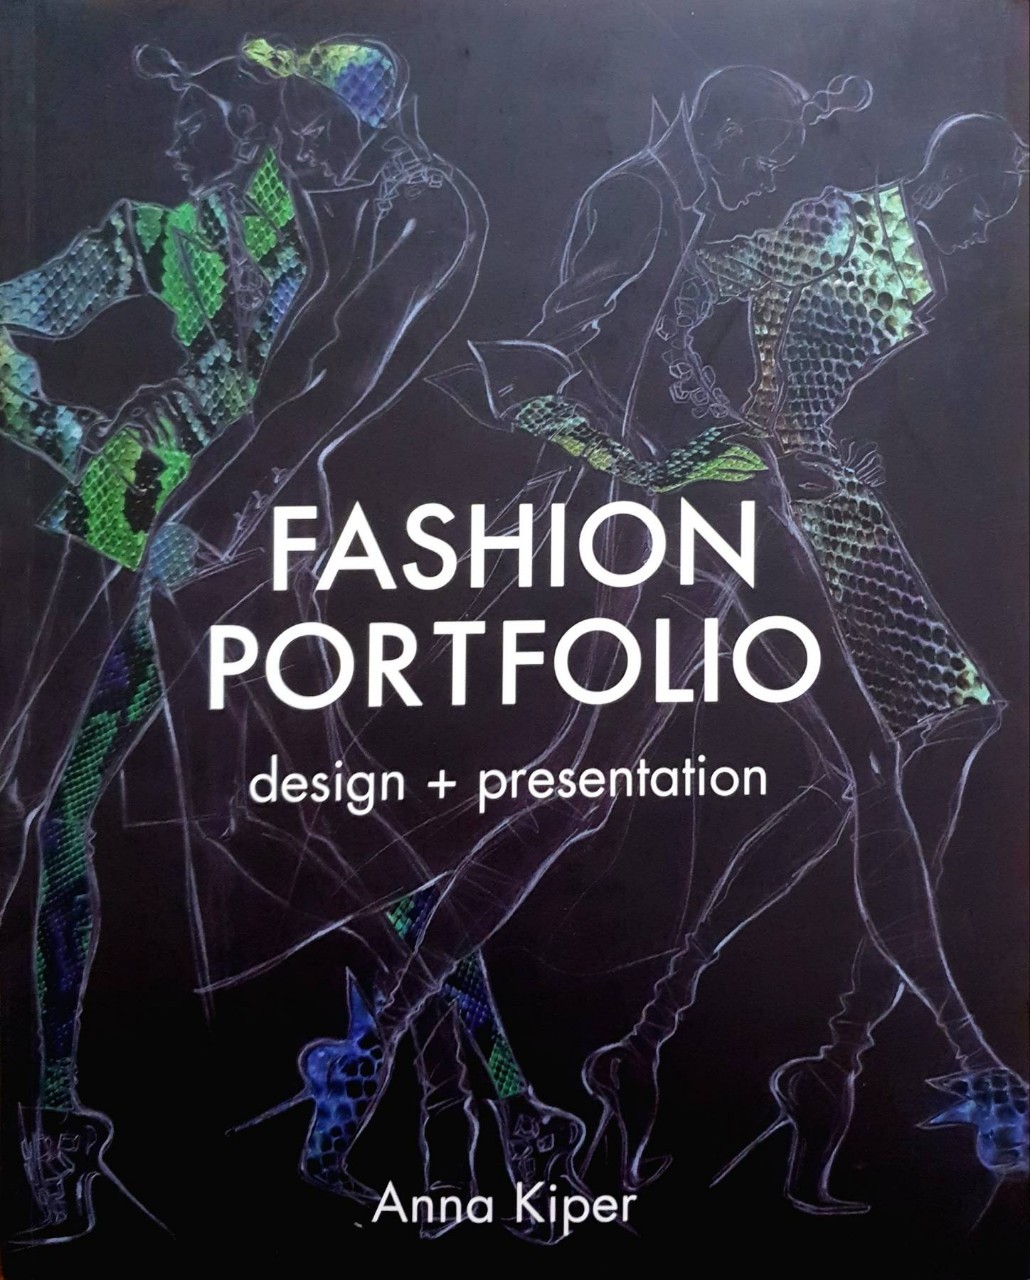 fashion portfolio design and presentation by anna kiper